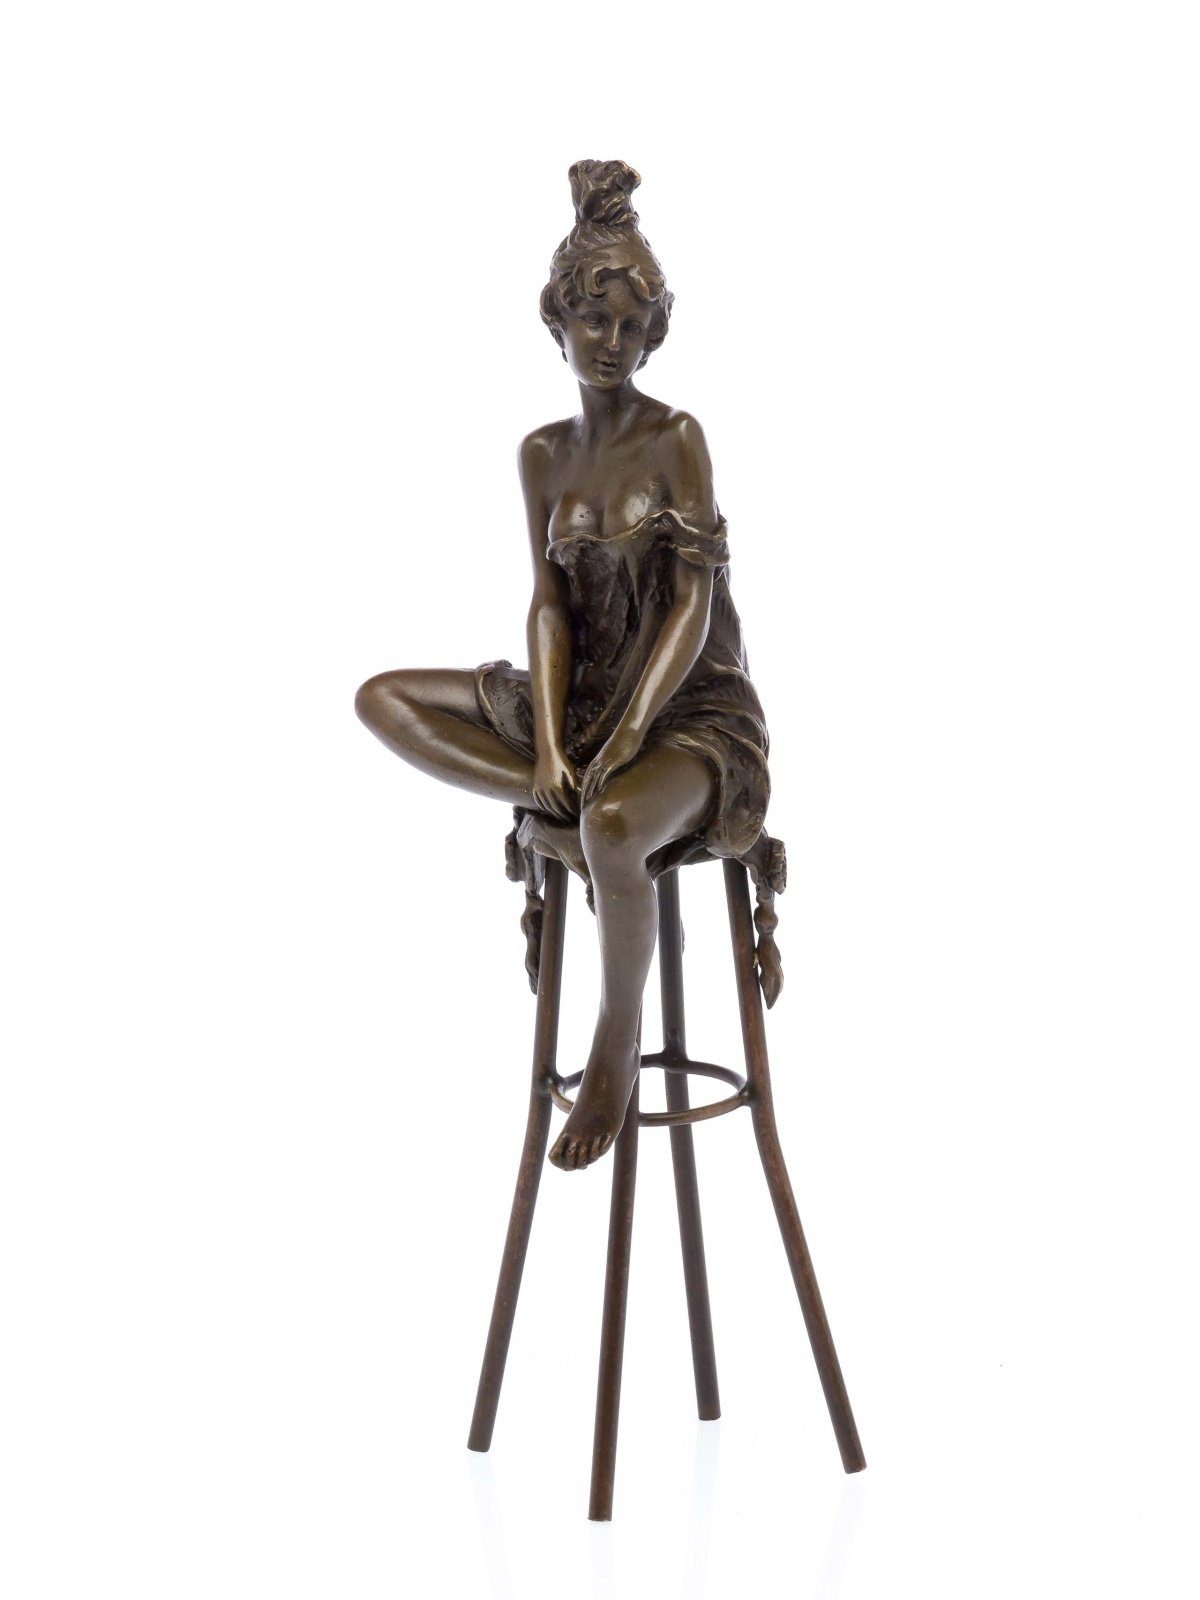 Aubaho Skulptur Bronzeskulptur Frau auf Barhocker Bronze Barfrau Figur Skulptur sculpt